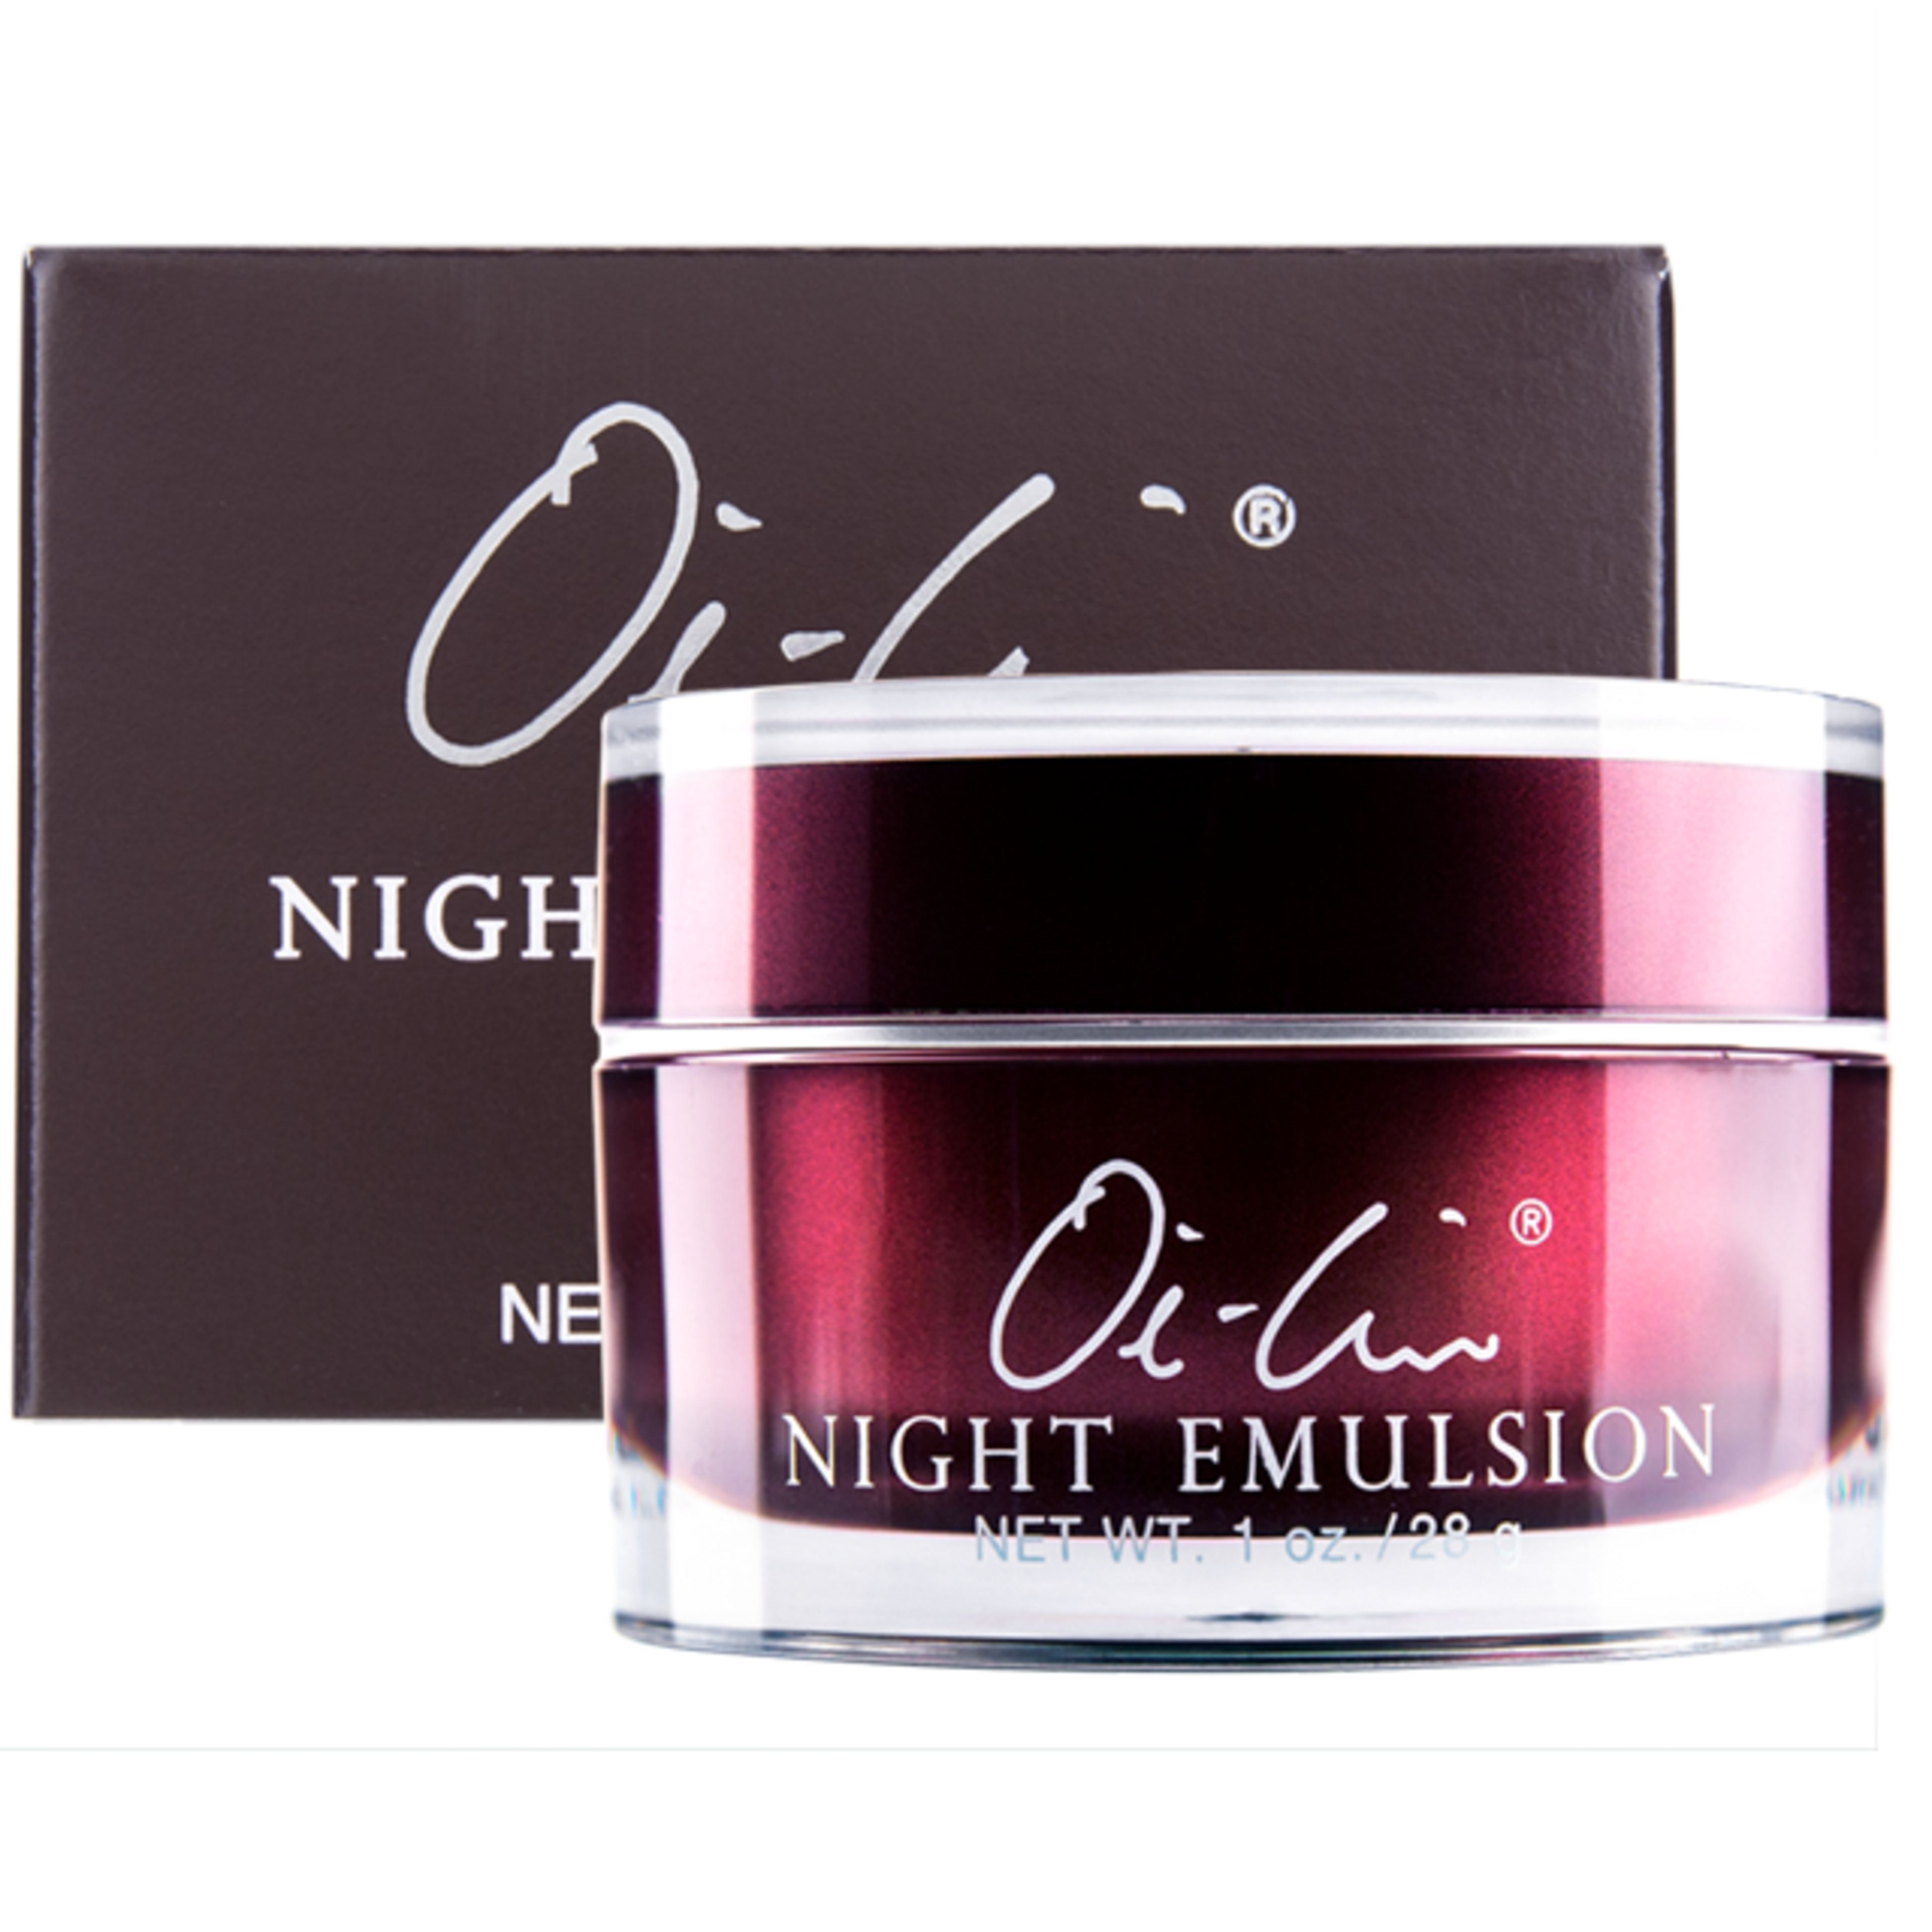 Oi-Lin® Night Emulsion Paraben Free 1 oz./28 g 